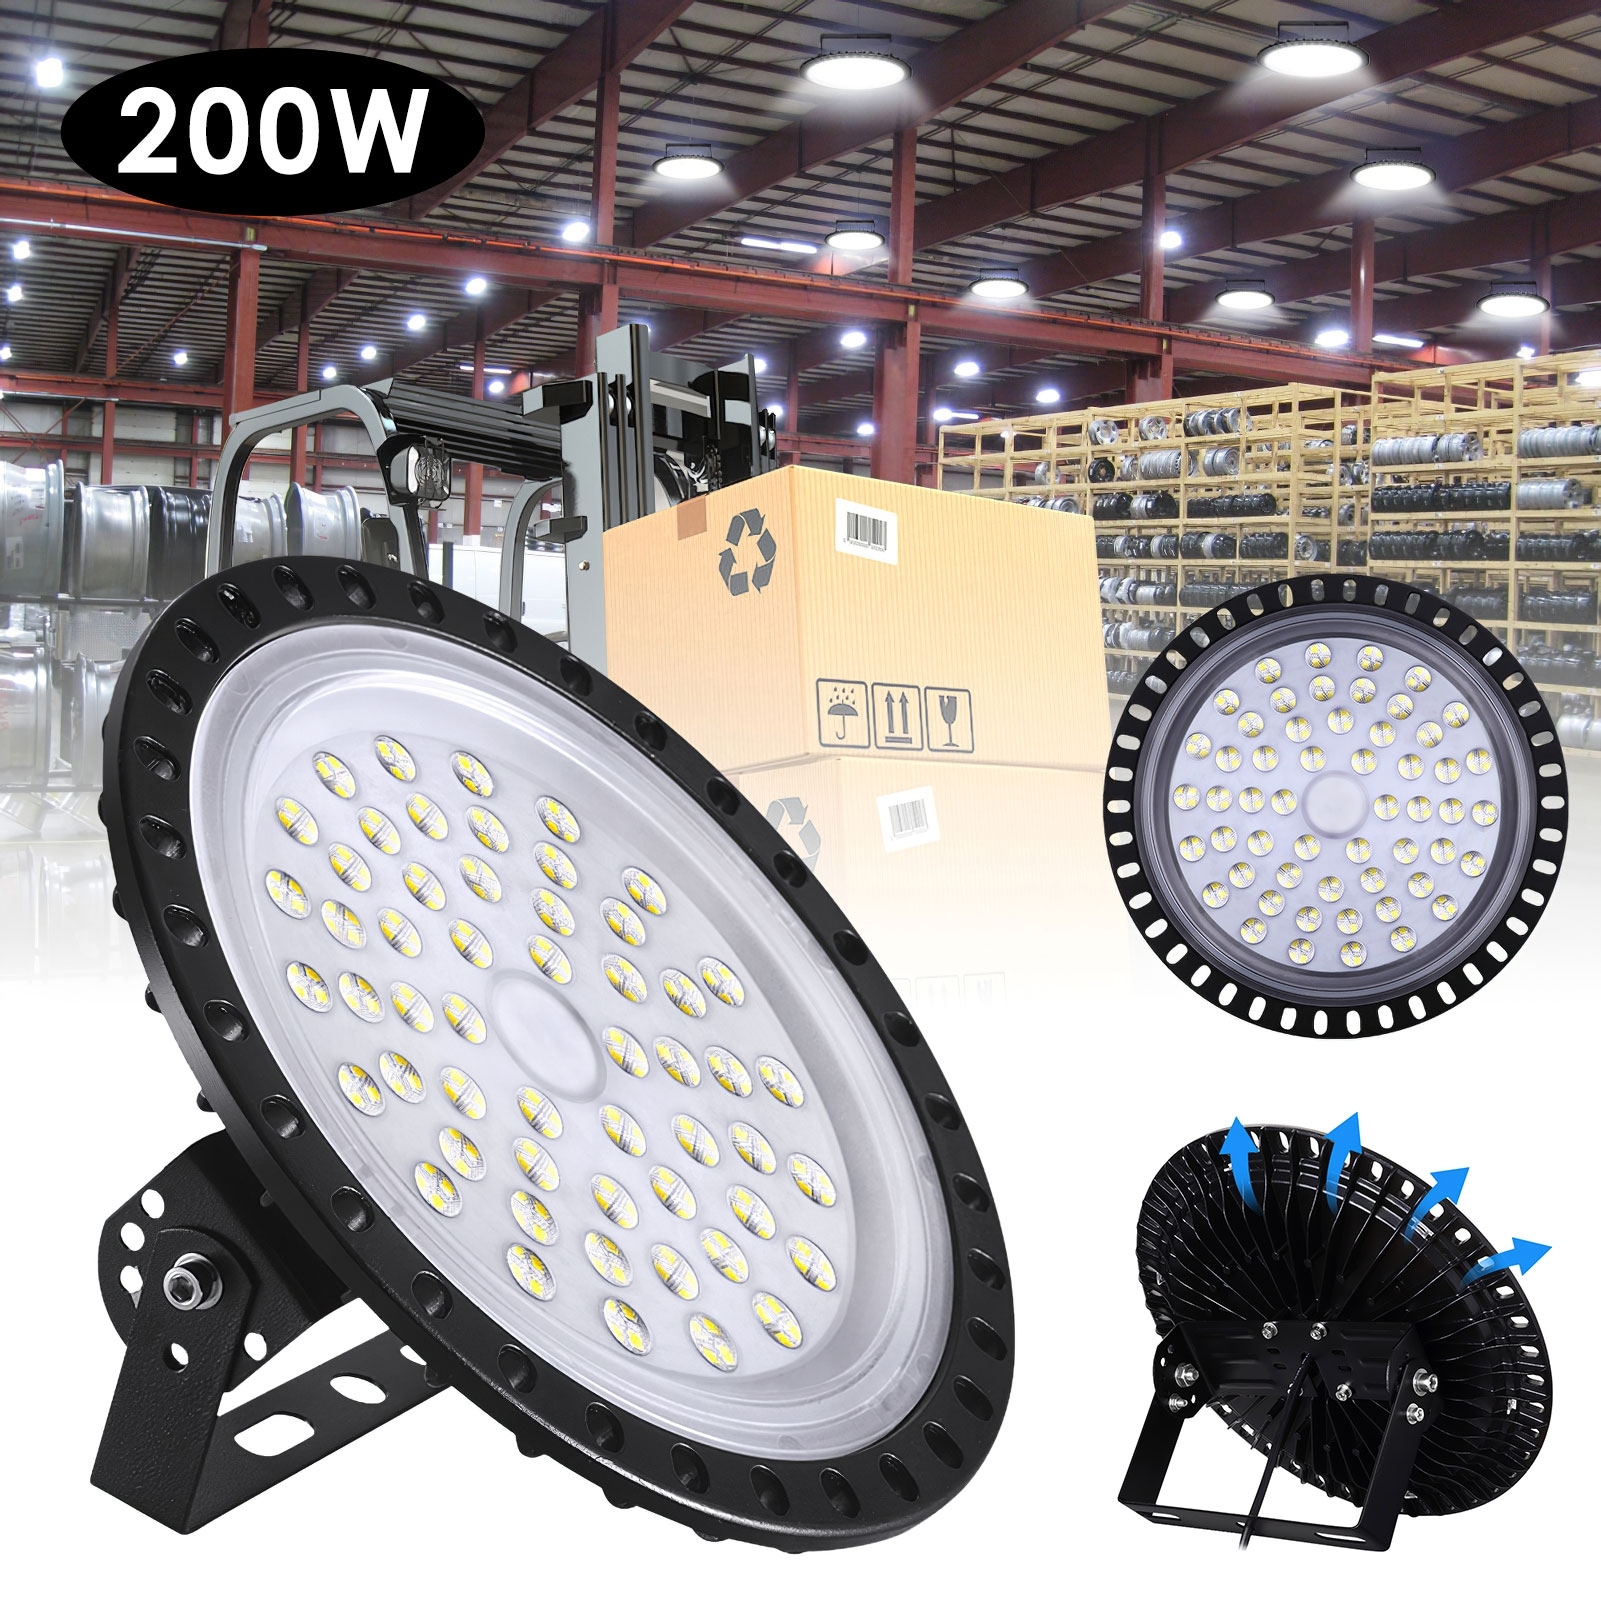 500W UFO LED High Bay Light 300W 250W 200W 100W Factory Warehouse Shop Lighting 